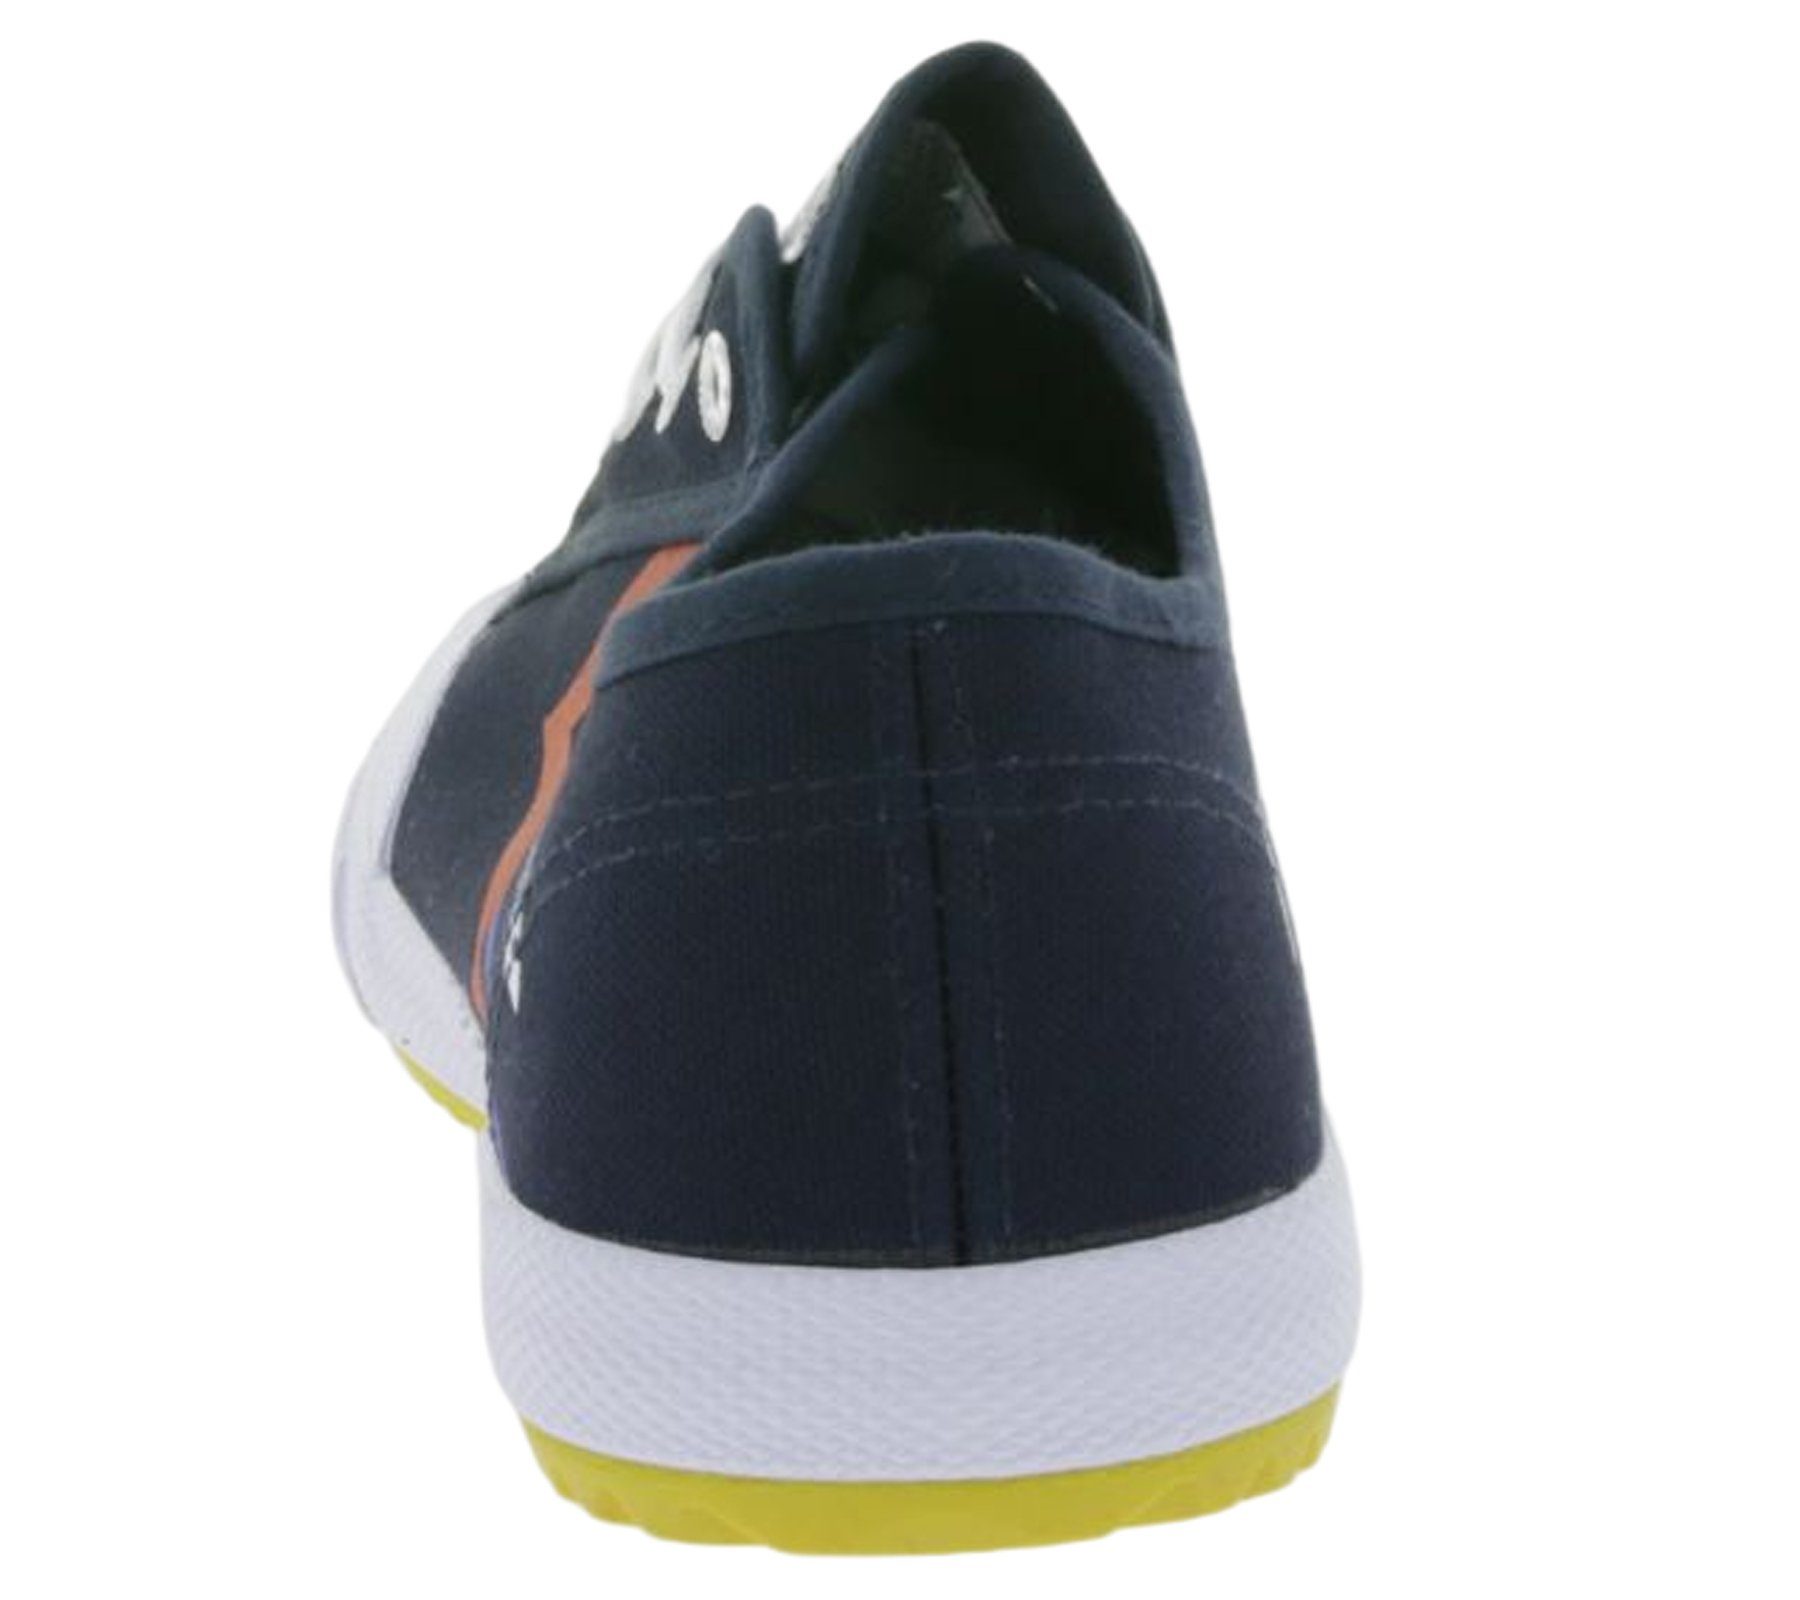 Plimsoll-Design für Navy-Blau Feiyue Fe Lo Sneaker in Sneaker 1920 Kampfkunst Sportschuhe Fitness-Schuhe Canvas Feiyue